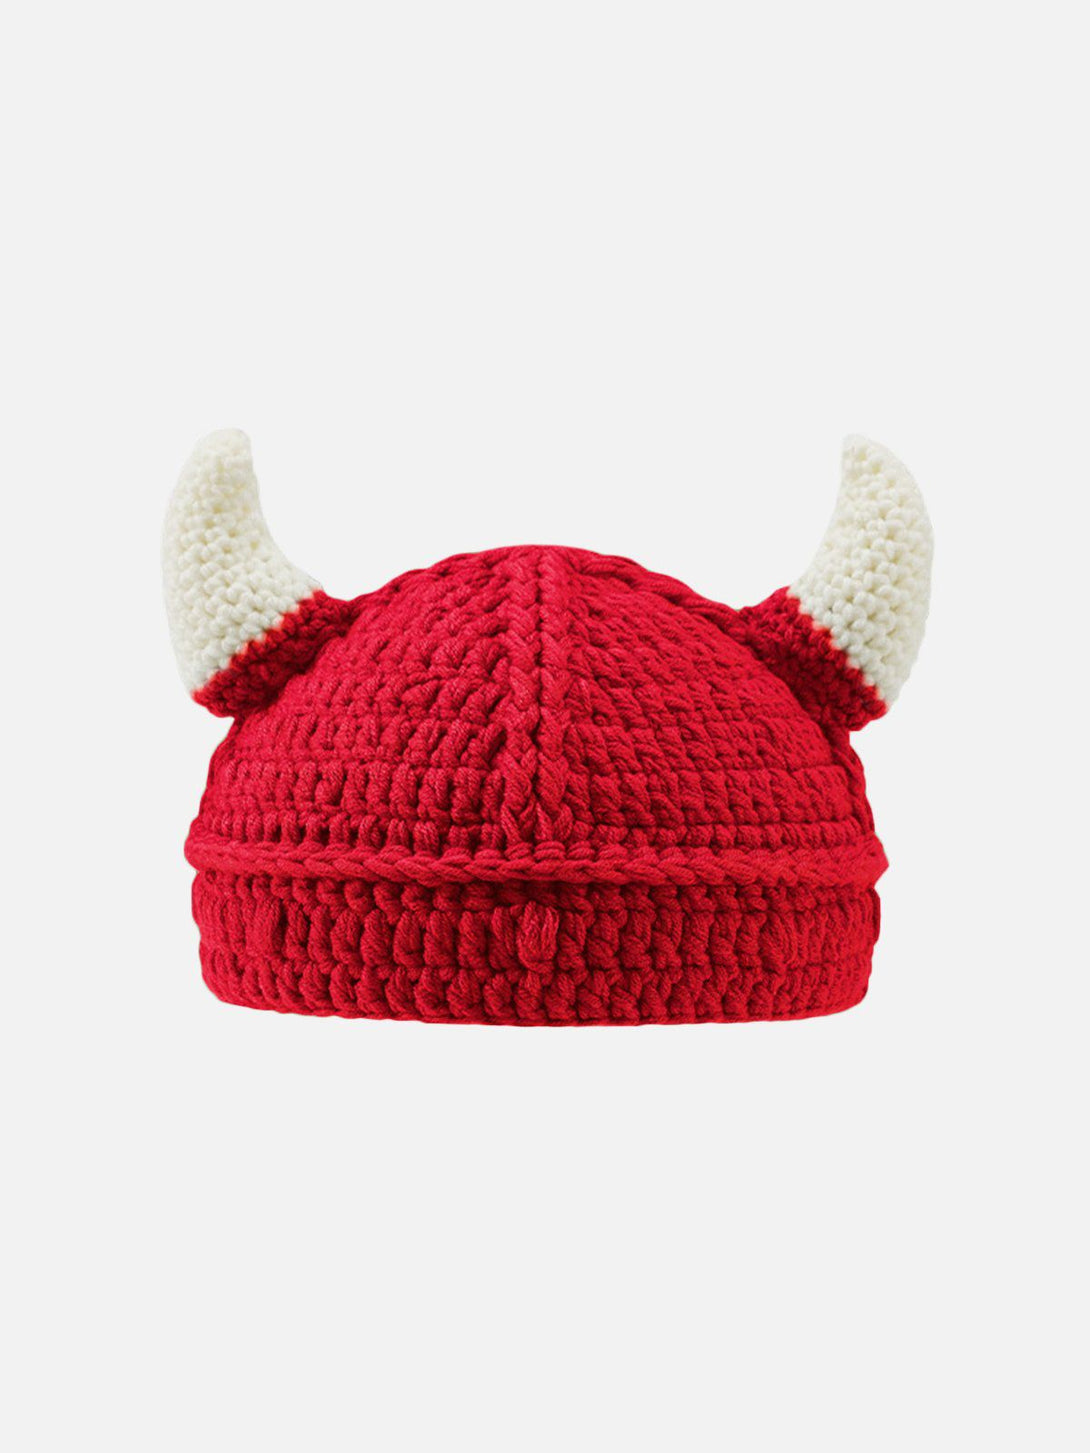 Majesda® - Devil's Corner Knitted Hat- Outfit Ideas - Streetwear Fashion - majesda.com